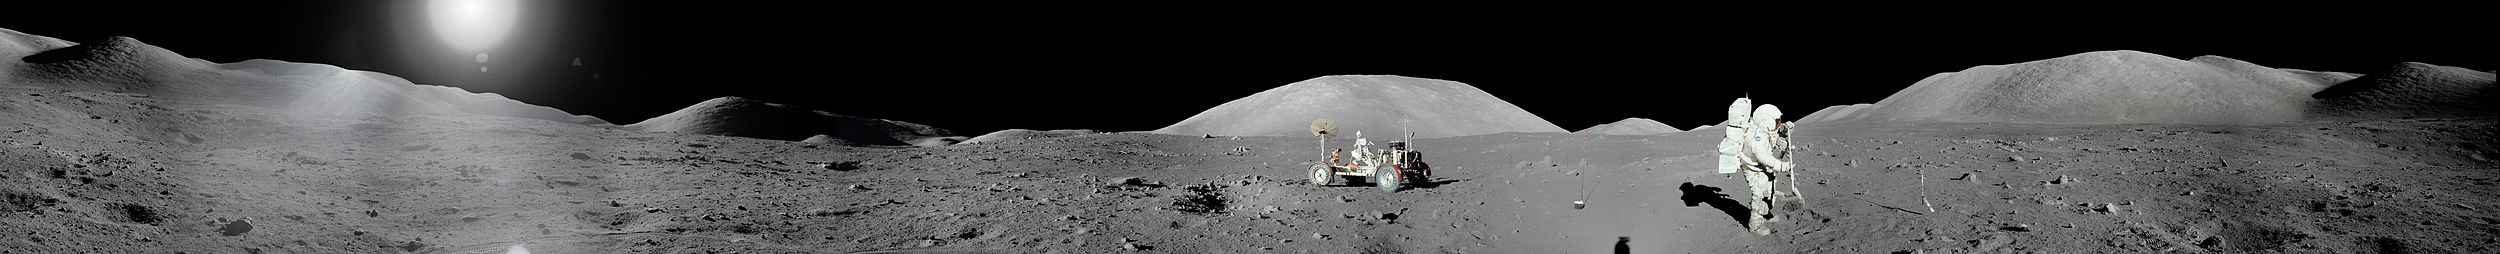 Панорама лунной поверхности, съёмка экипажа Аполлона-17.